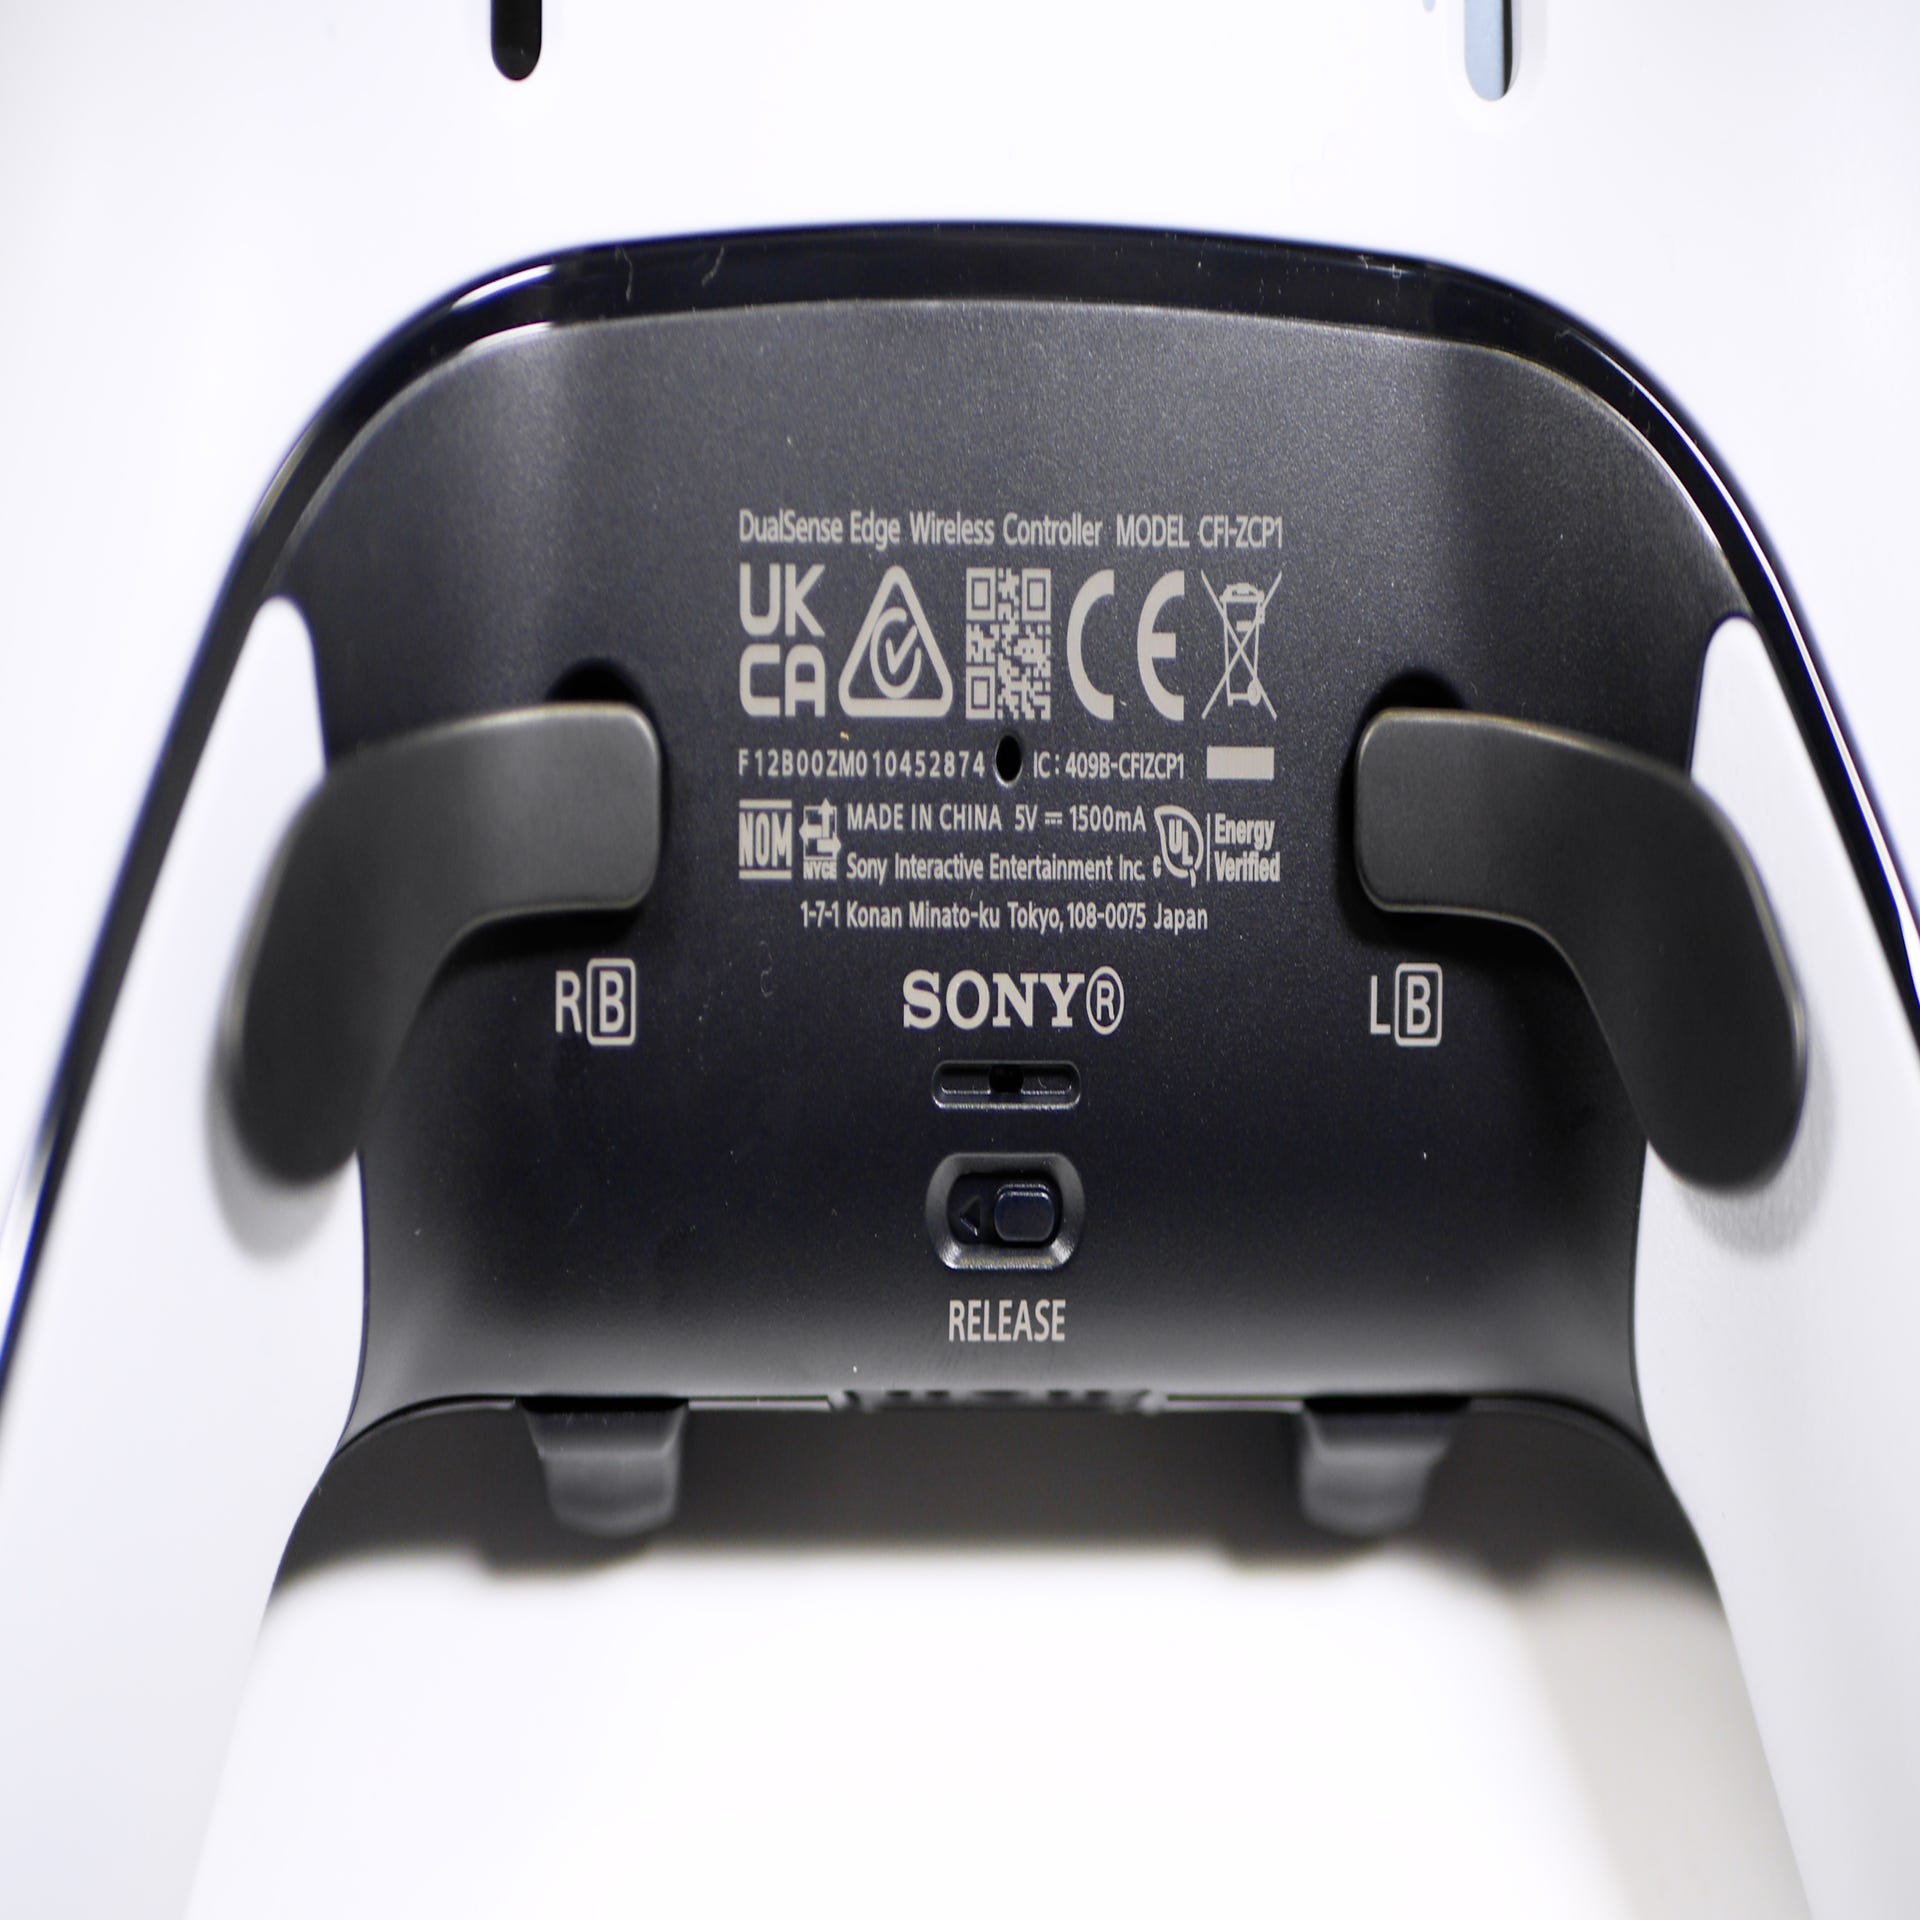 Sony PlayStation 5 DualSense Edge Wireless Controller